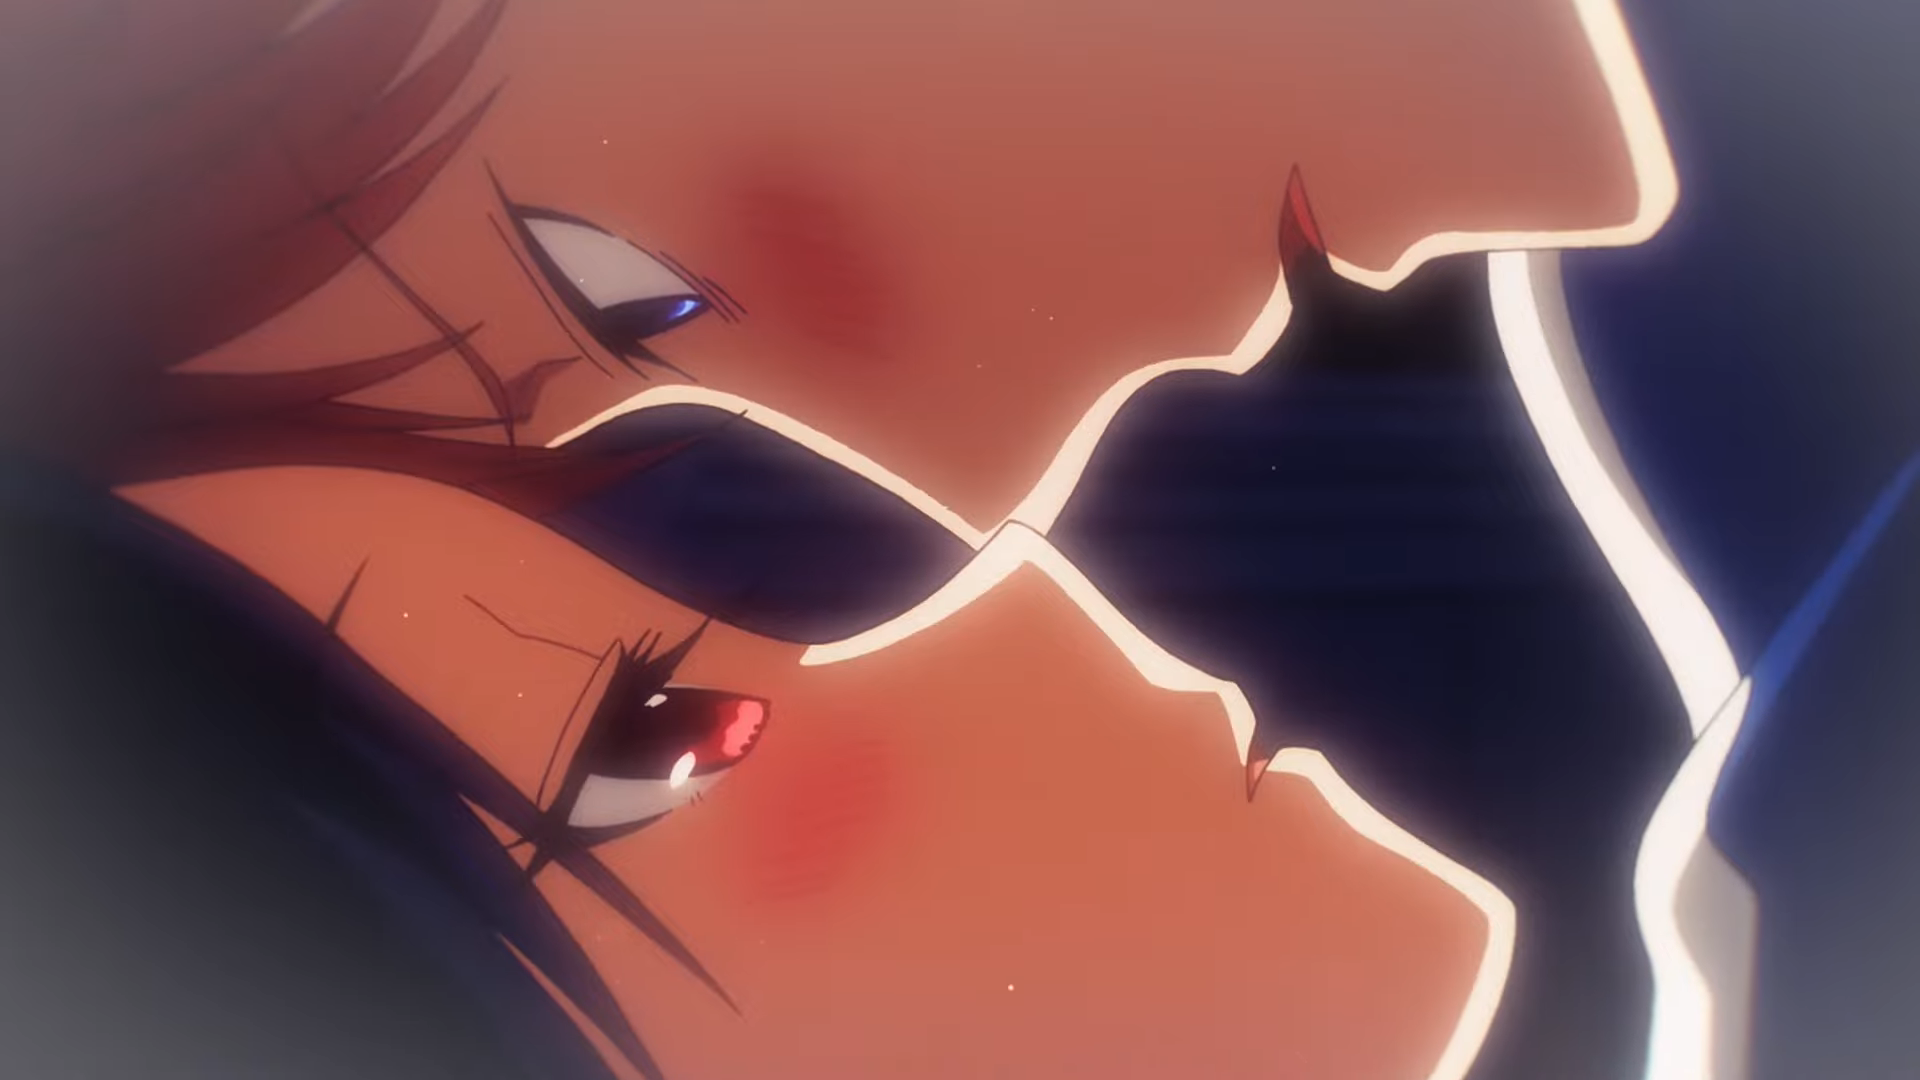 Kaguya-sama: First Kiss Never Ends Anime Gets Key Visual and Trailer, Premiere Date